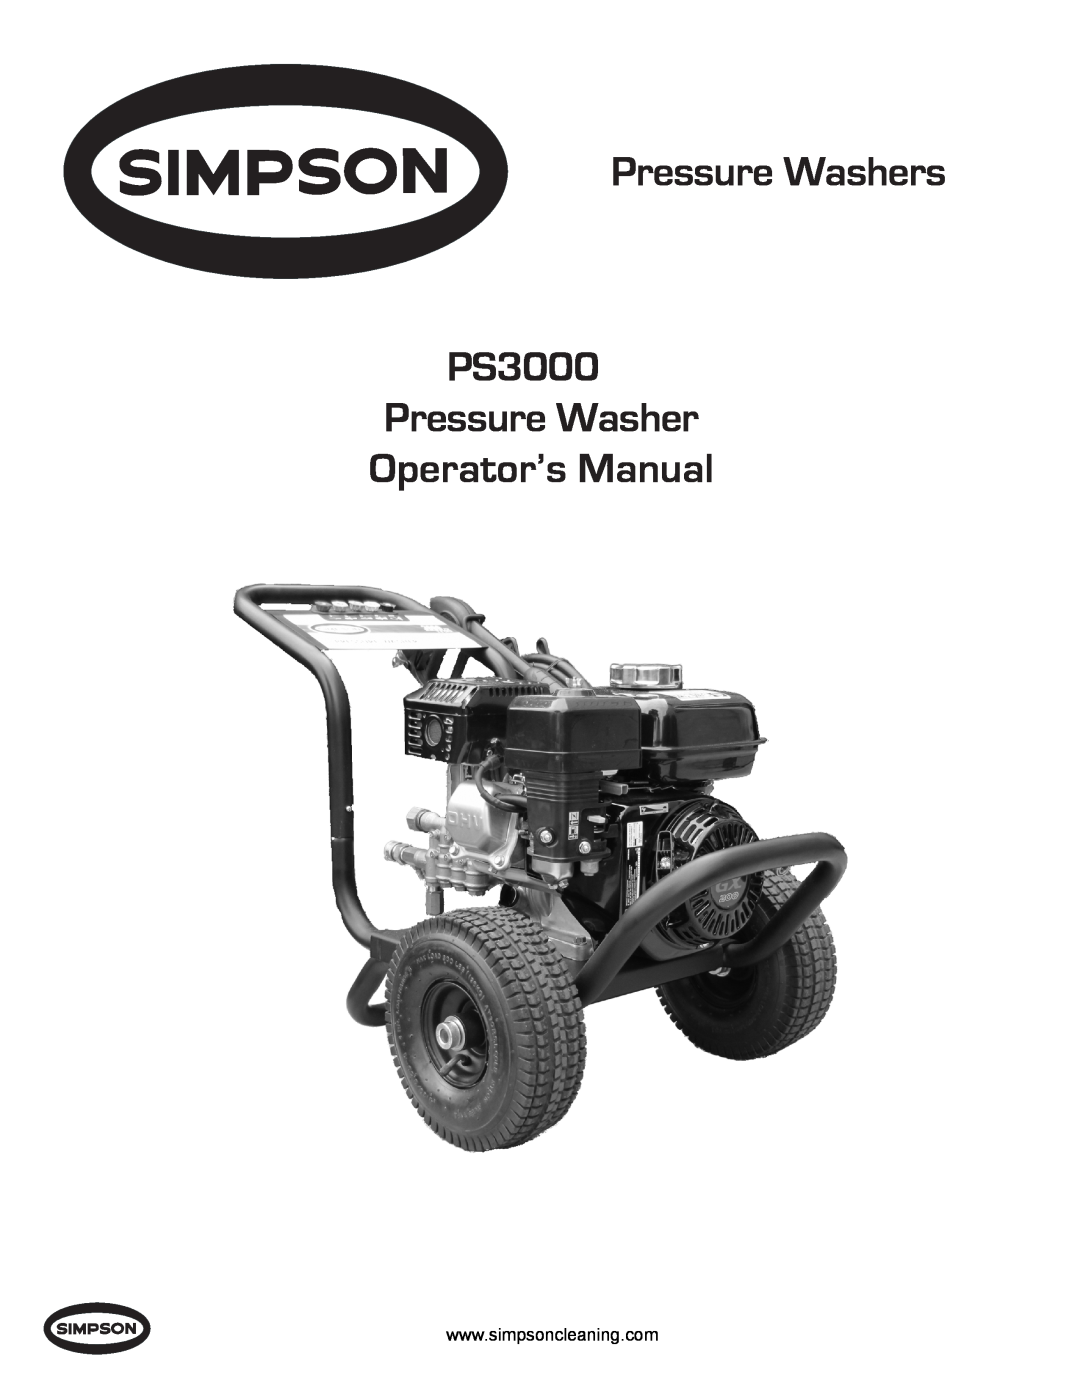 Simpson manual Pressure Washers PS3000 Pressure Washer, Operator’s Manual 